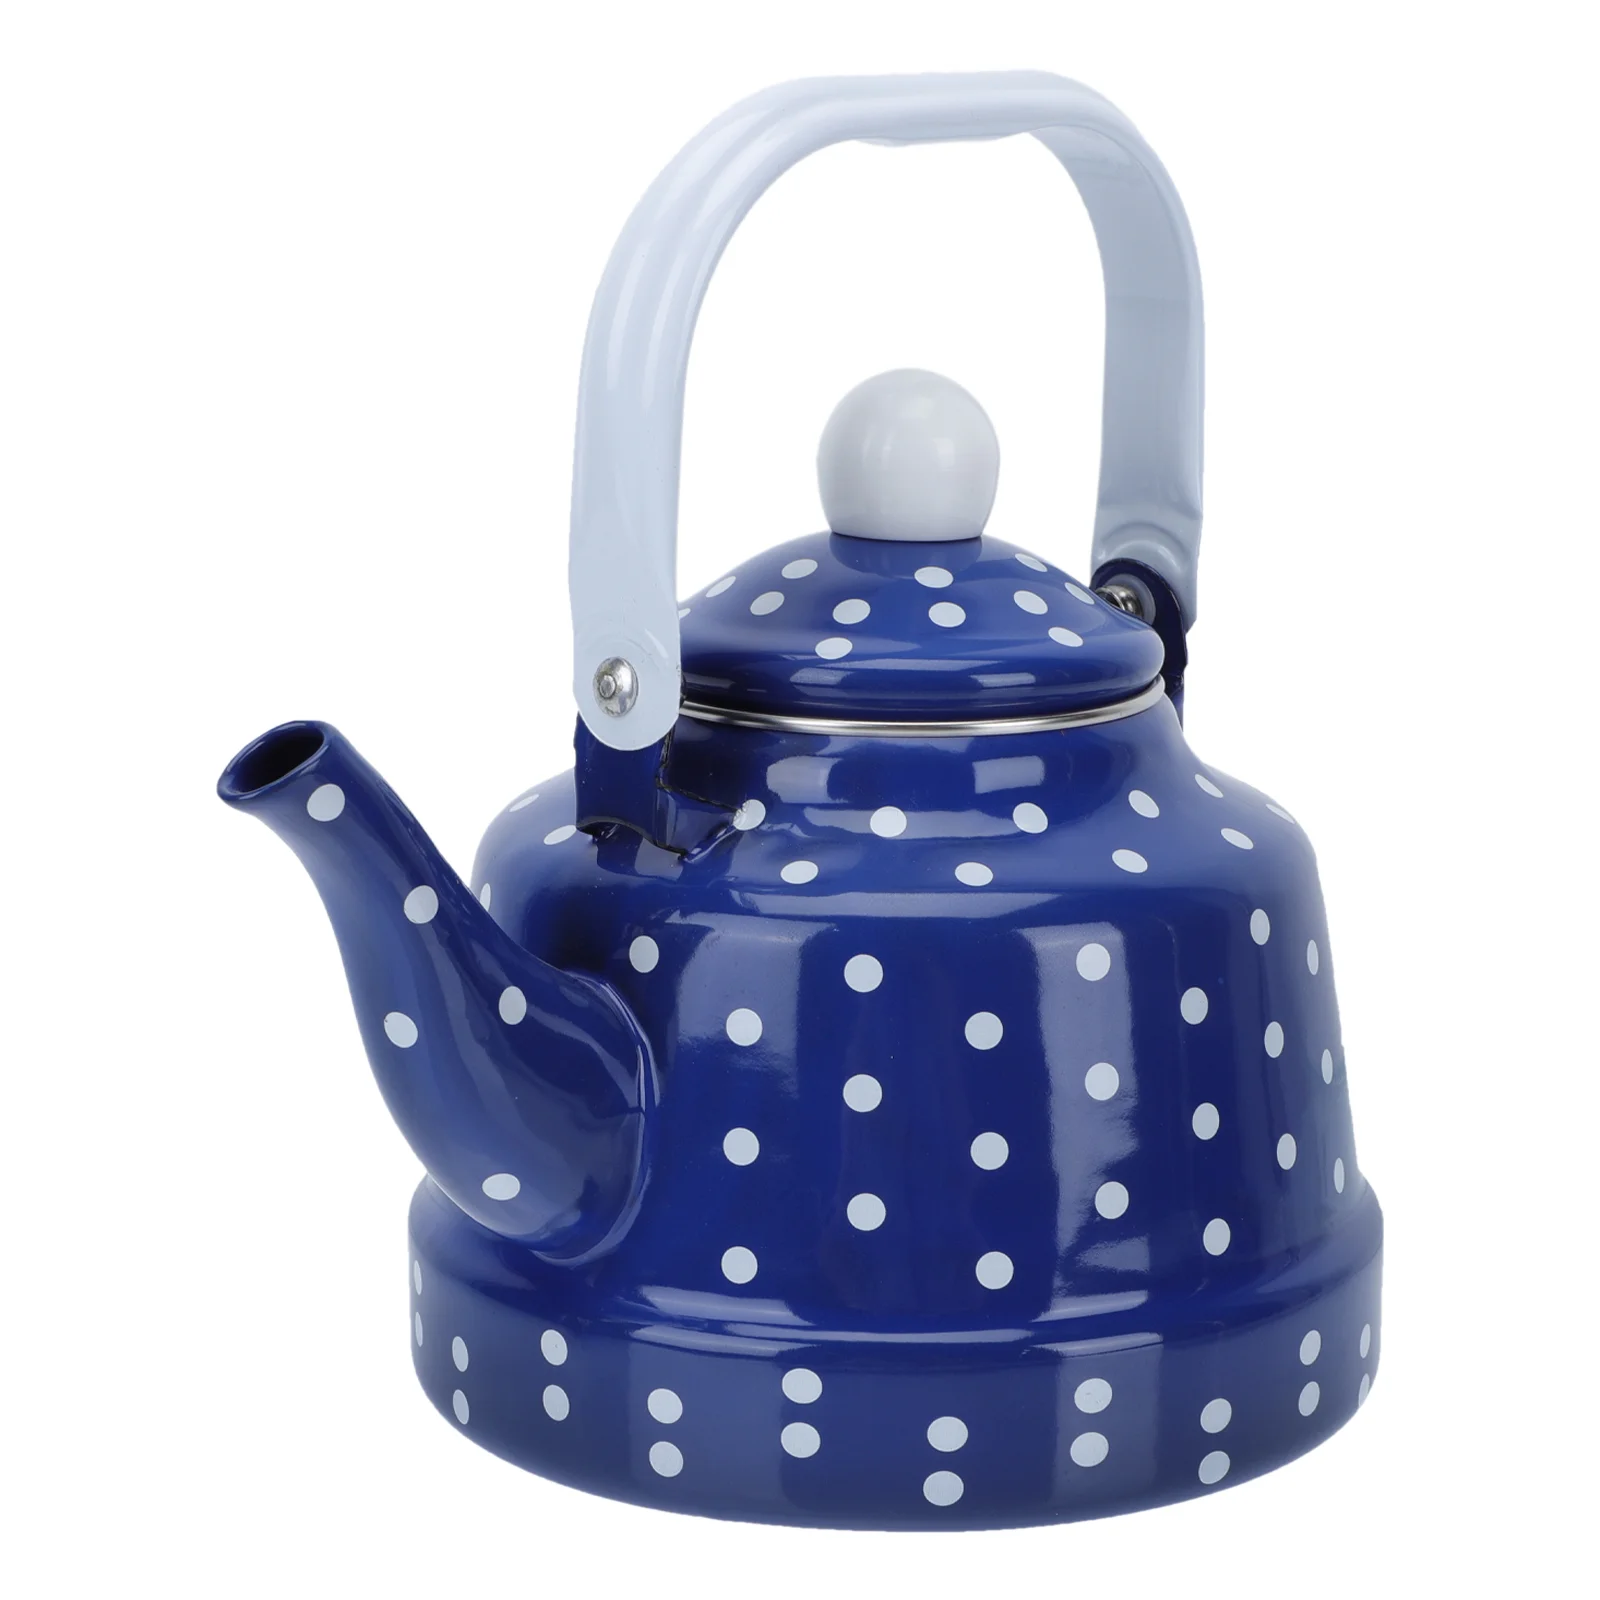 

Kettle Tea Teapot Pot Water Enamel Ceramic Coffee Boiling Kettles Whistling Enameled Vintage Dot Polka Stovetop Japanese